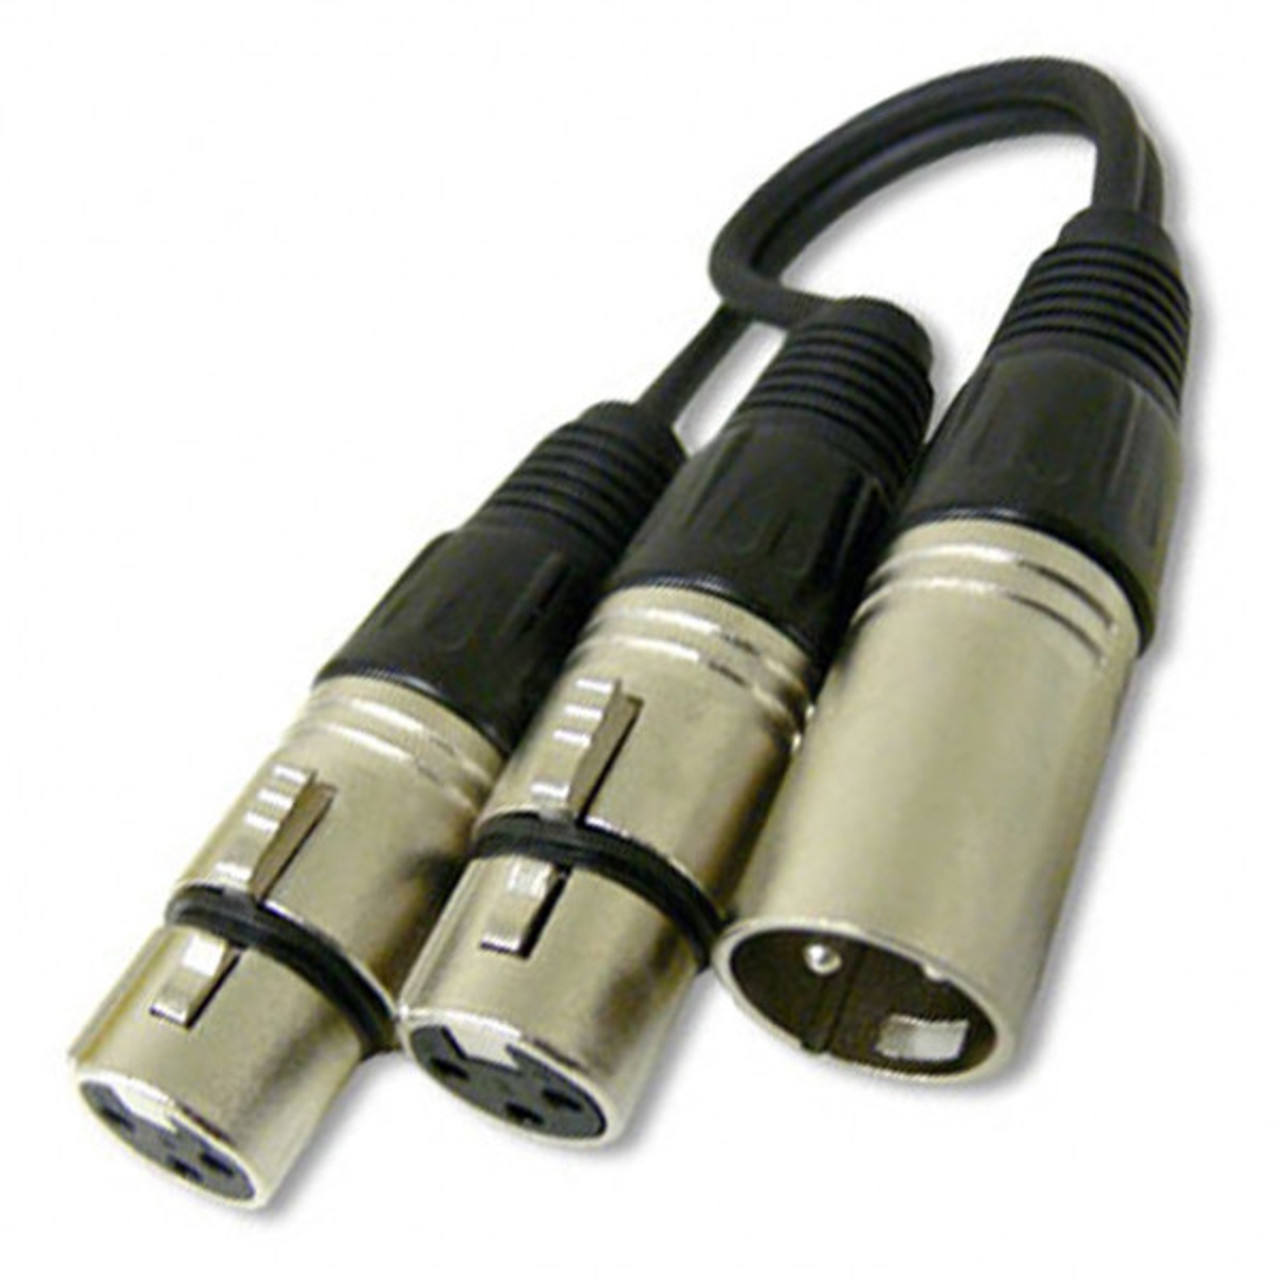 XLR Y Splitter Cable